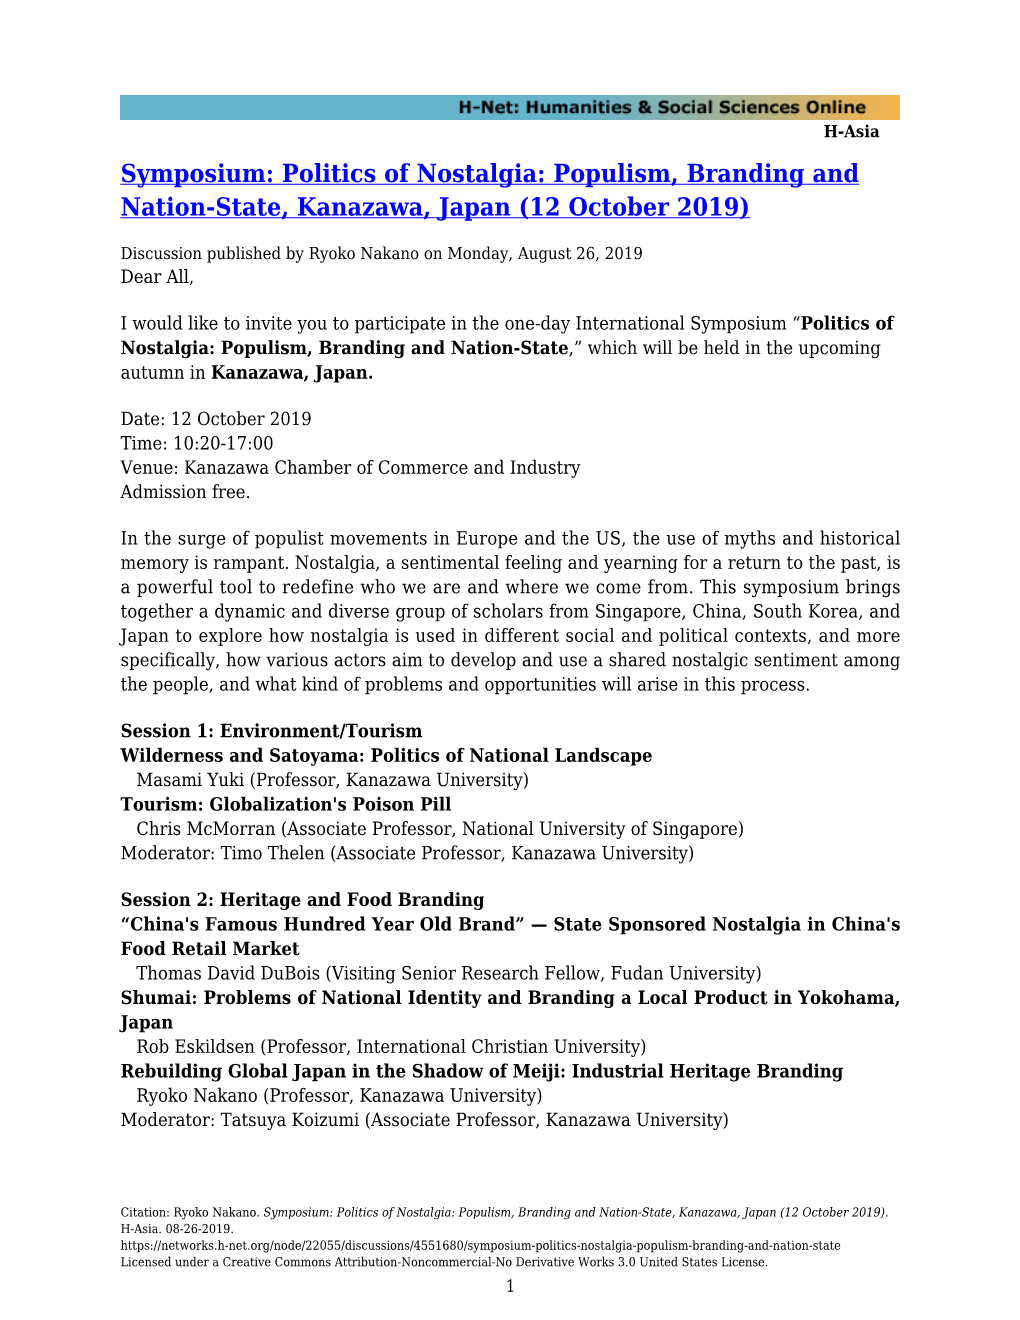 Symposium: Politics of Nostalgia: Populism, Branding and Nation-State, Kanazawa, Japan (12 October 2019)